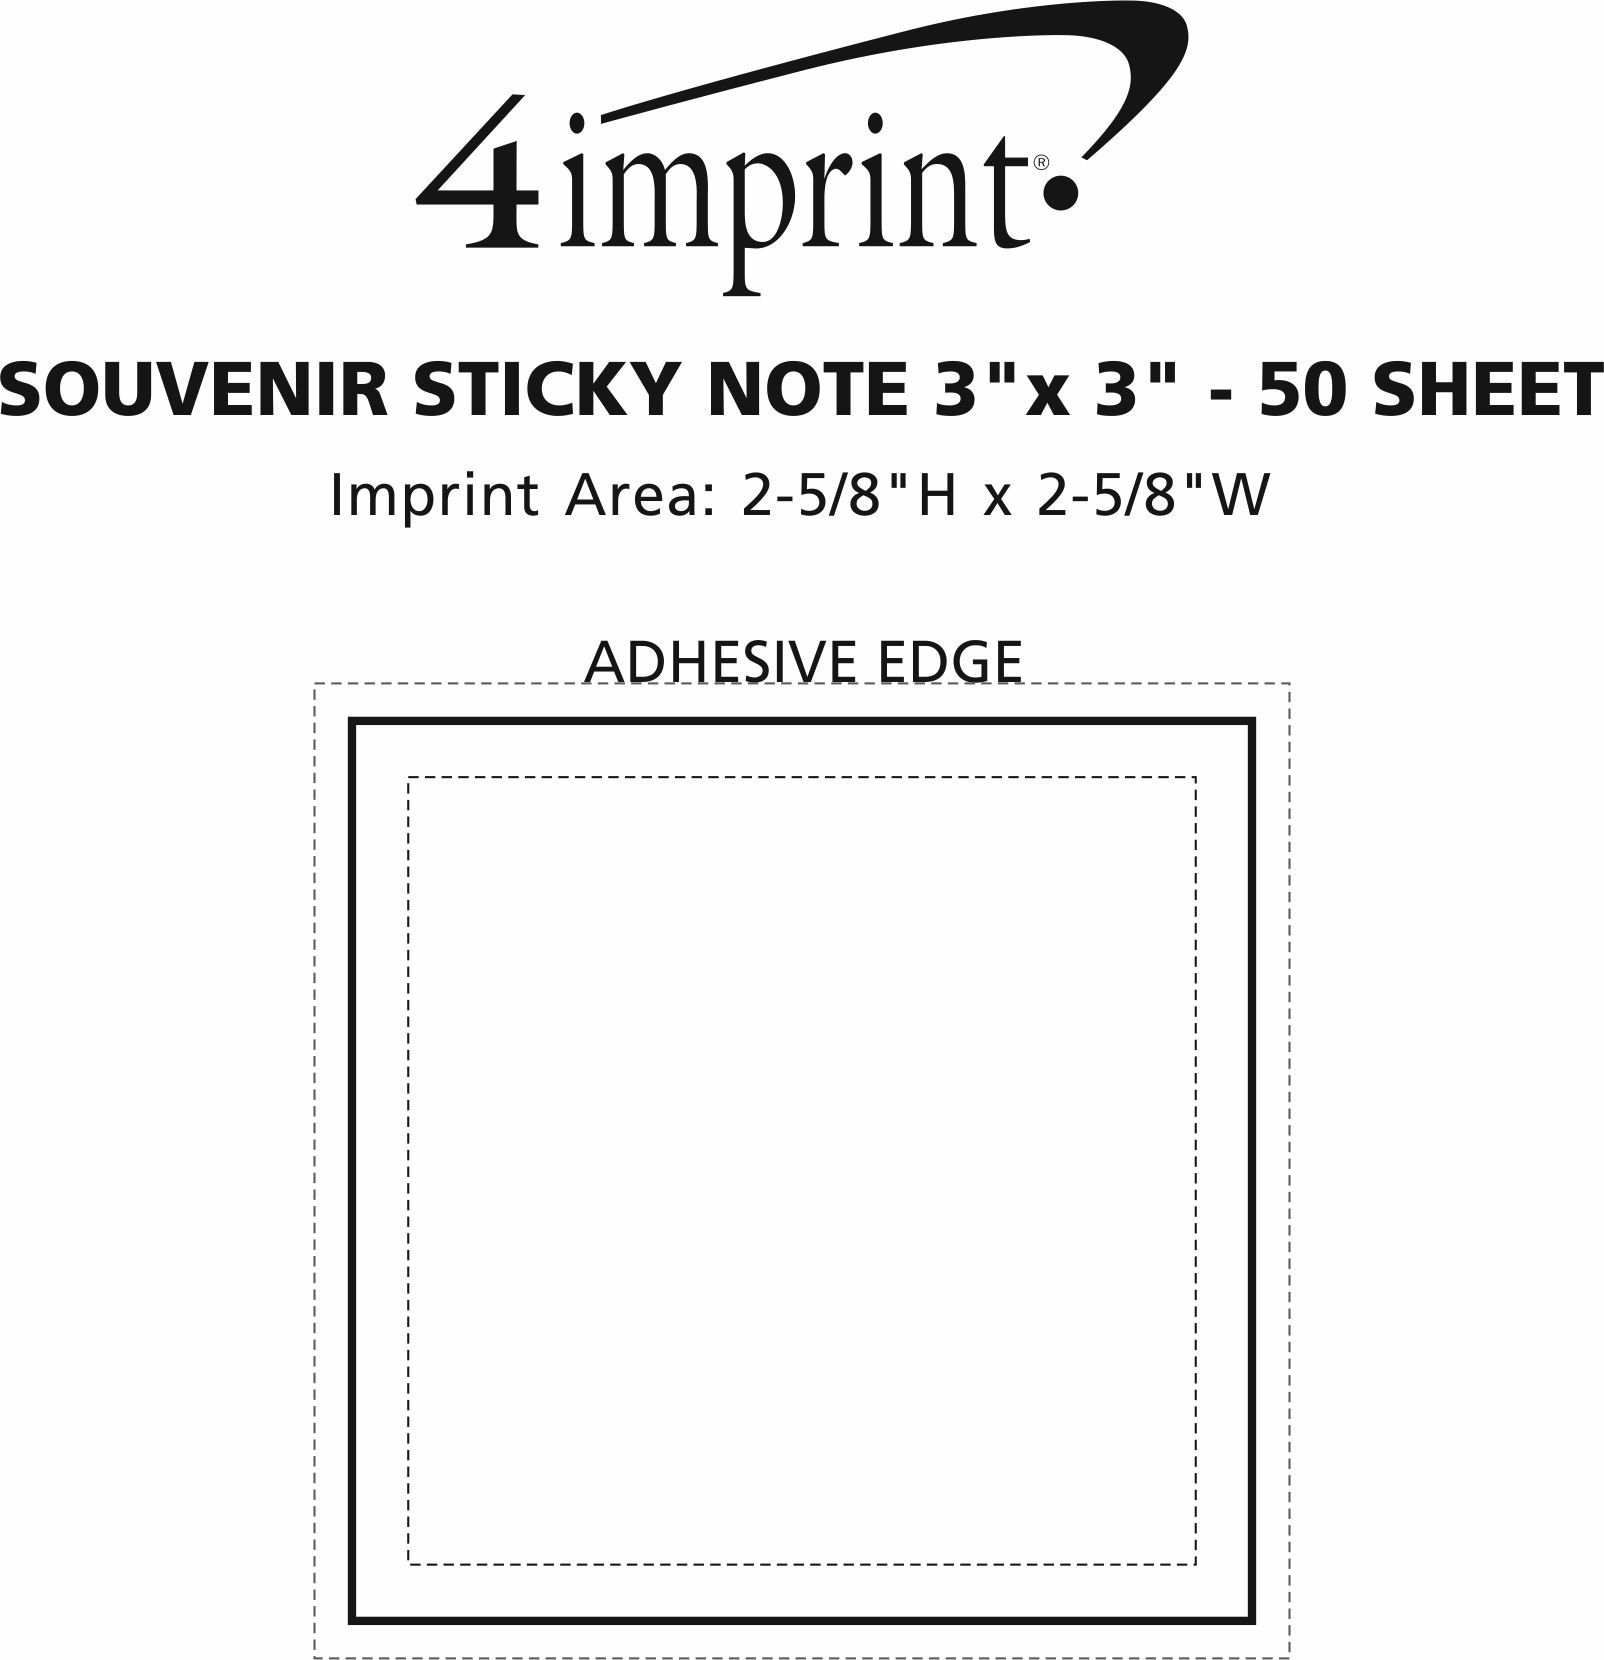 Imprint Area of Souvenir Sticky Note - 3" x 3" - 50 Sheet